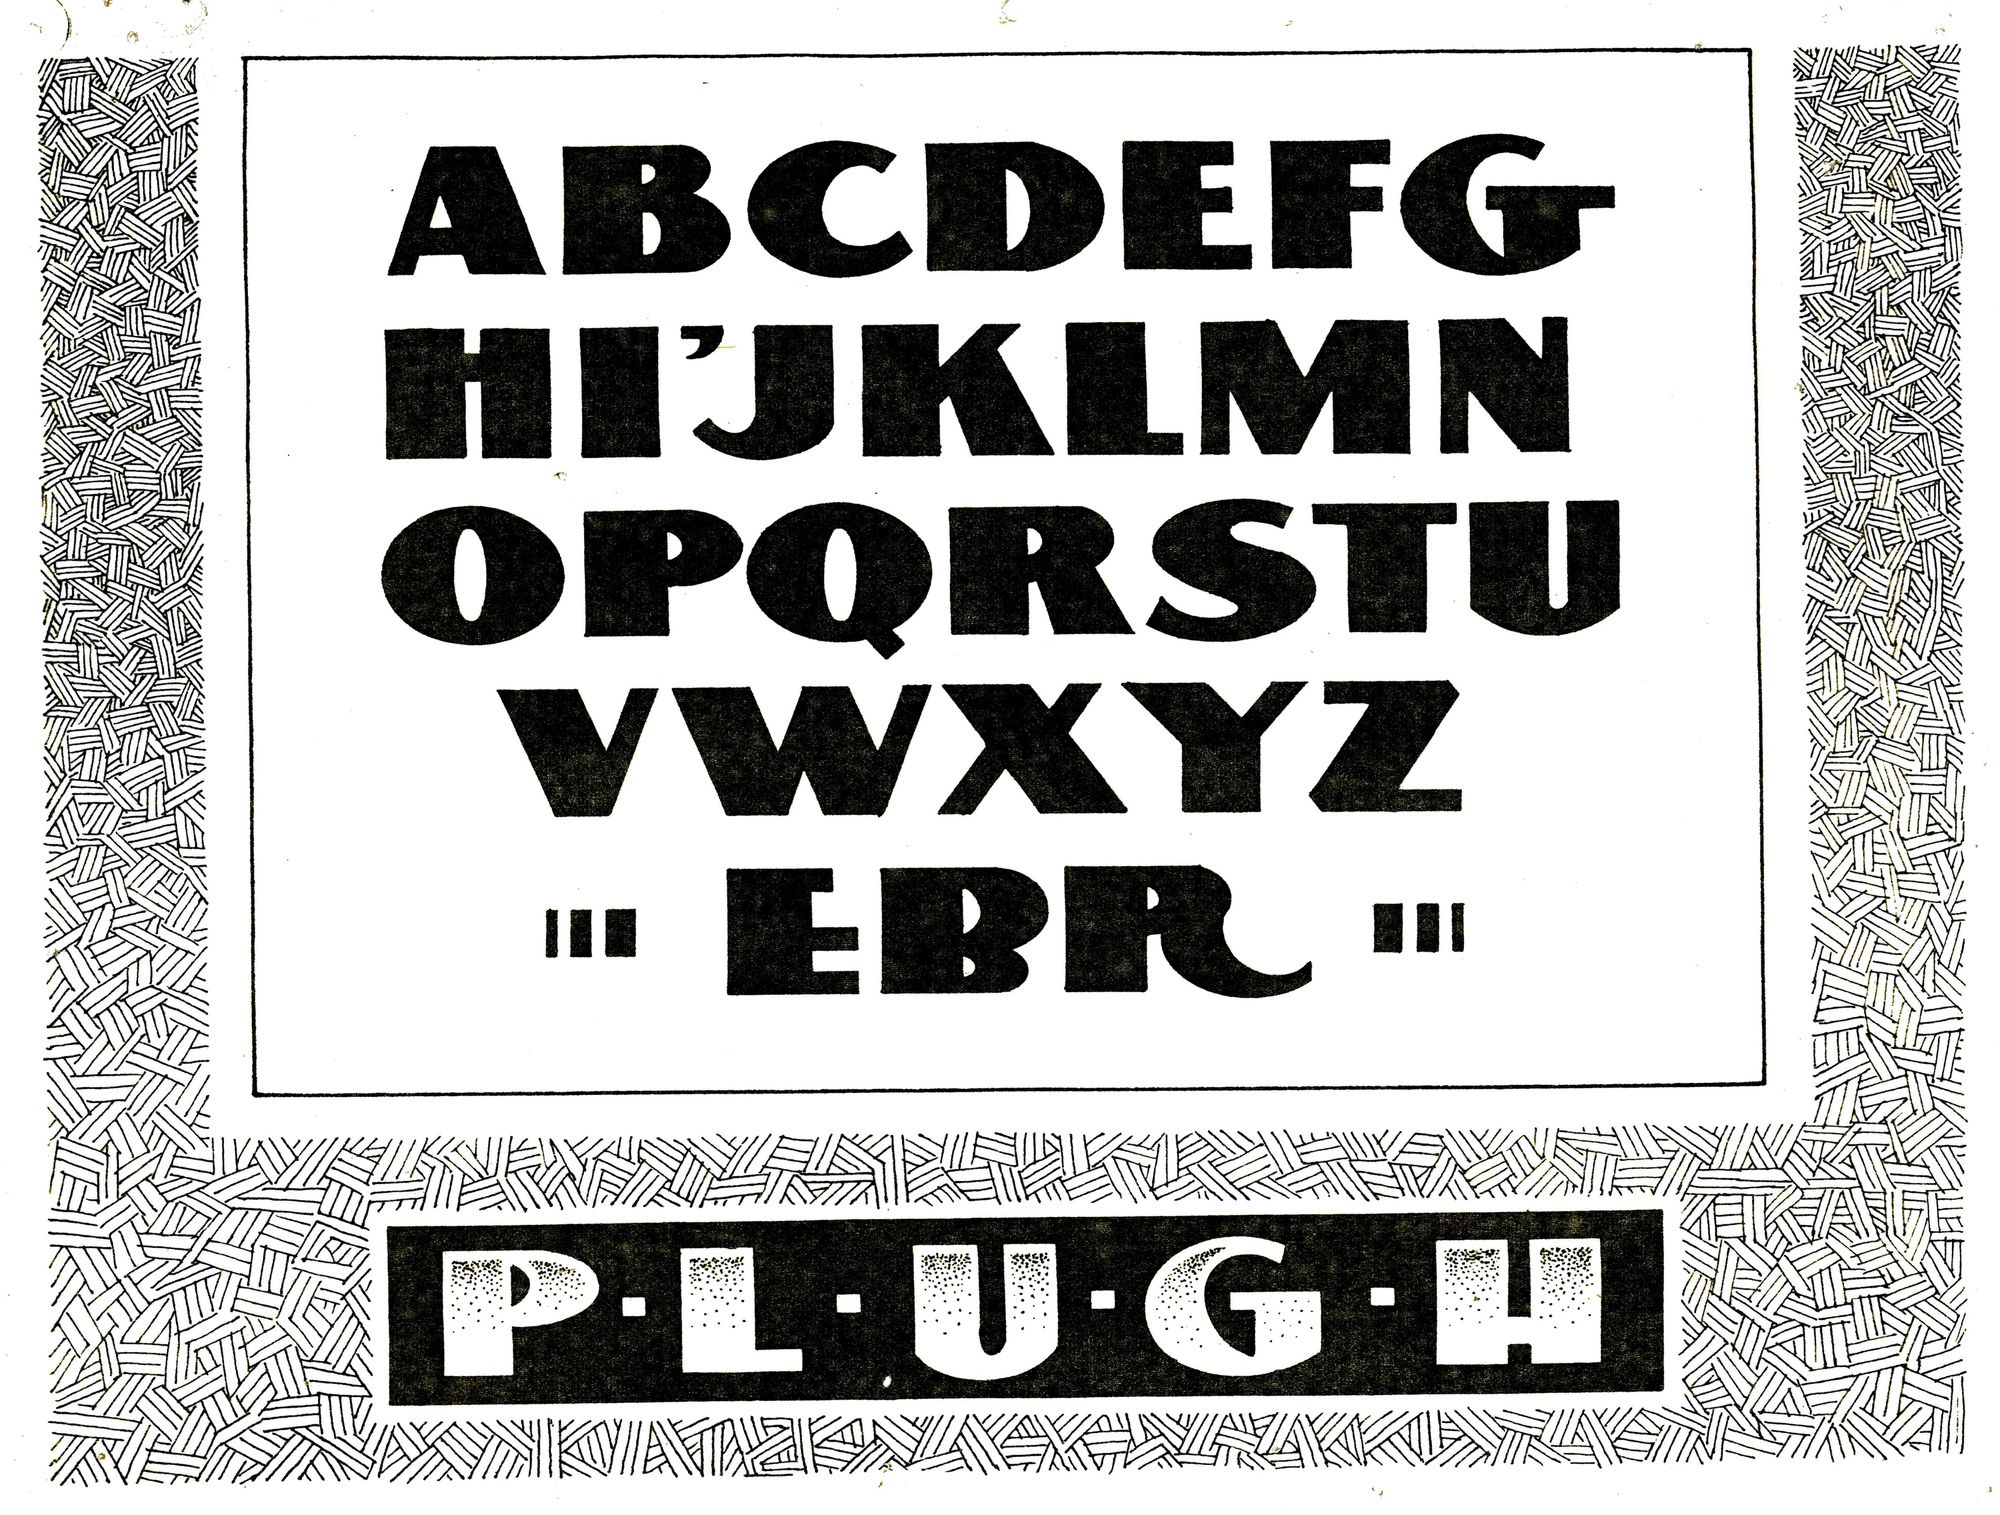 Hand-drawn block alphabet in black and white.